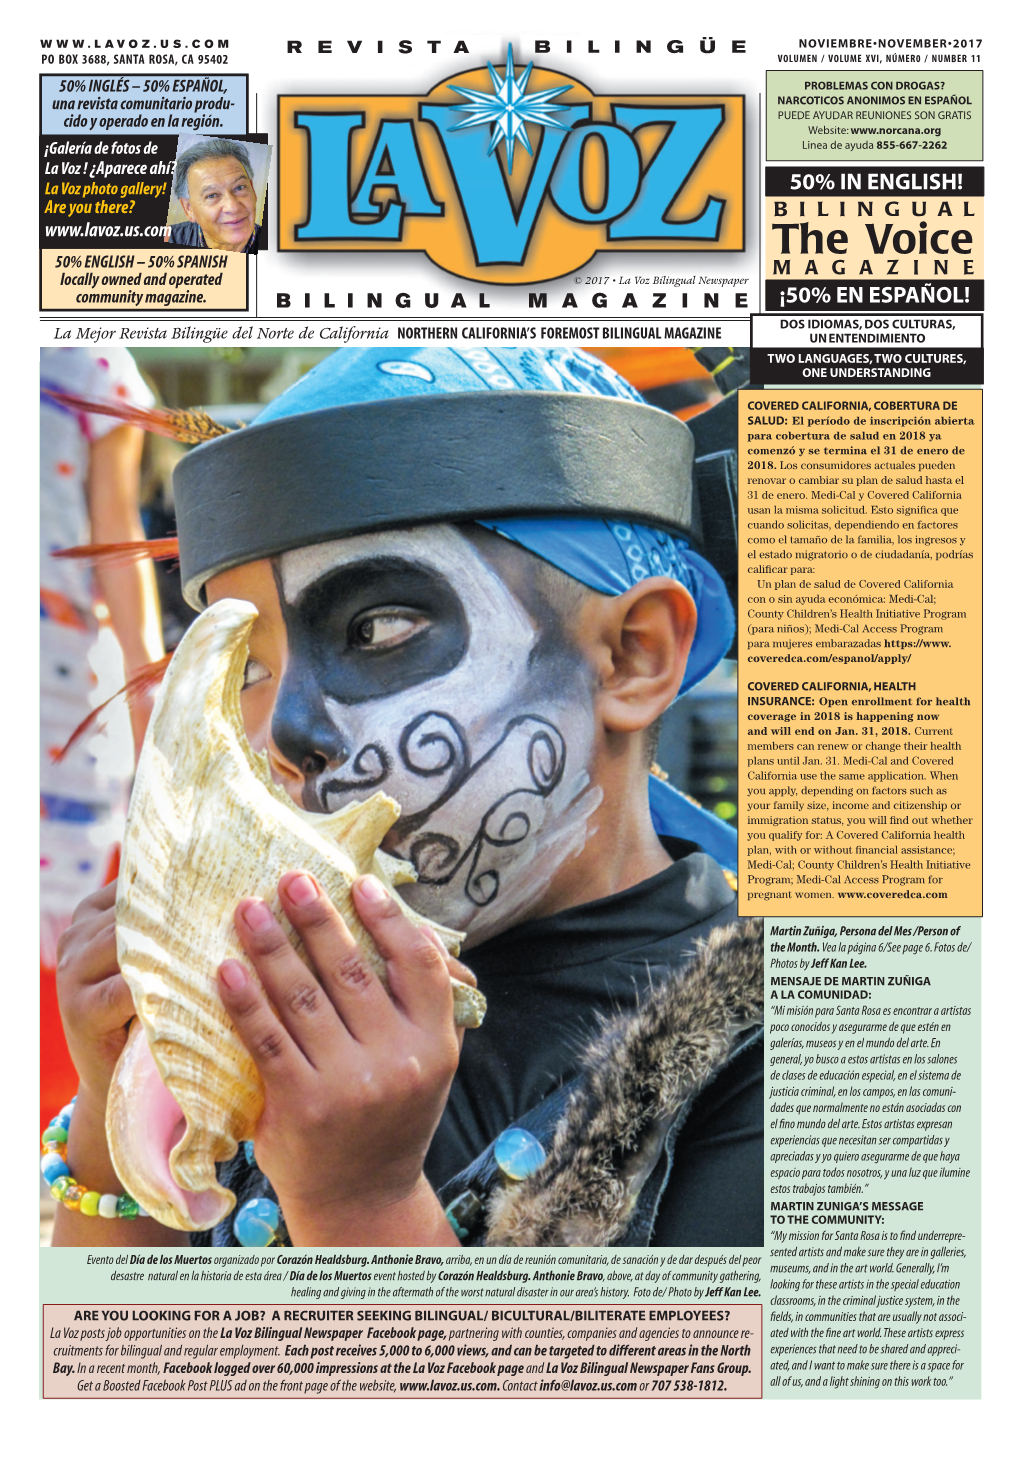 The Voice 50% ENGLISH – 50% SPANISH MAGAZINE Locally Owned and Operated © 2017 • La Voz Bilingual Newspaper Community Magazine